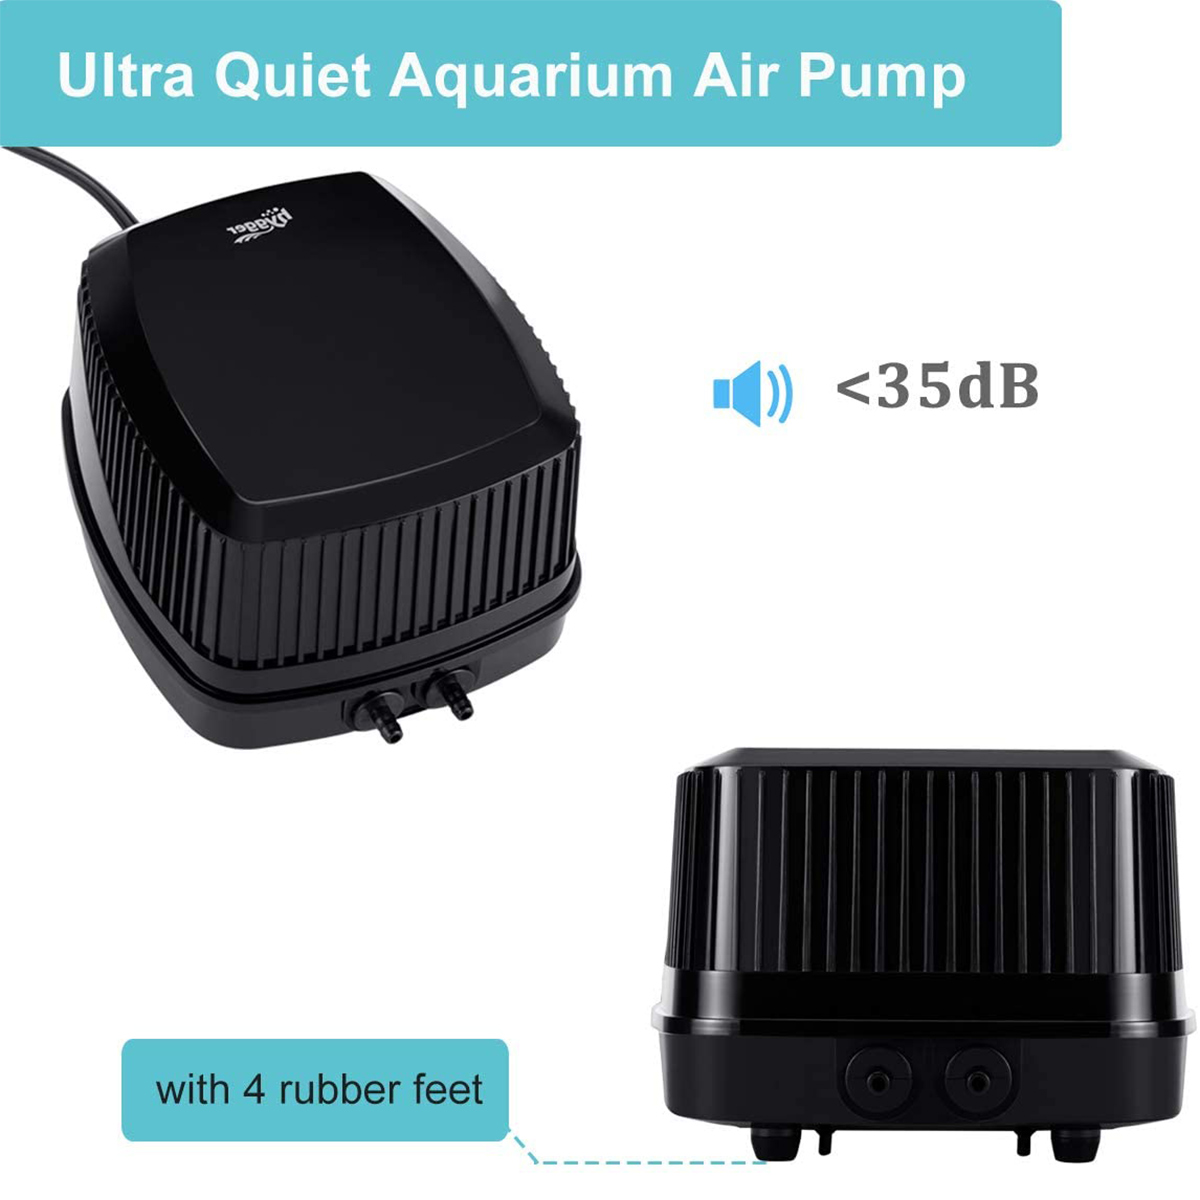 Hygger 16L/Min Oxygen Pump, 2 Air Outlets for Aquarium Air Pump